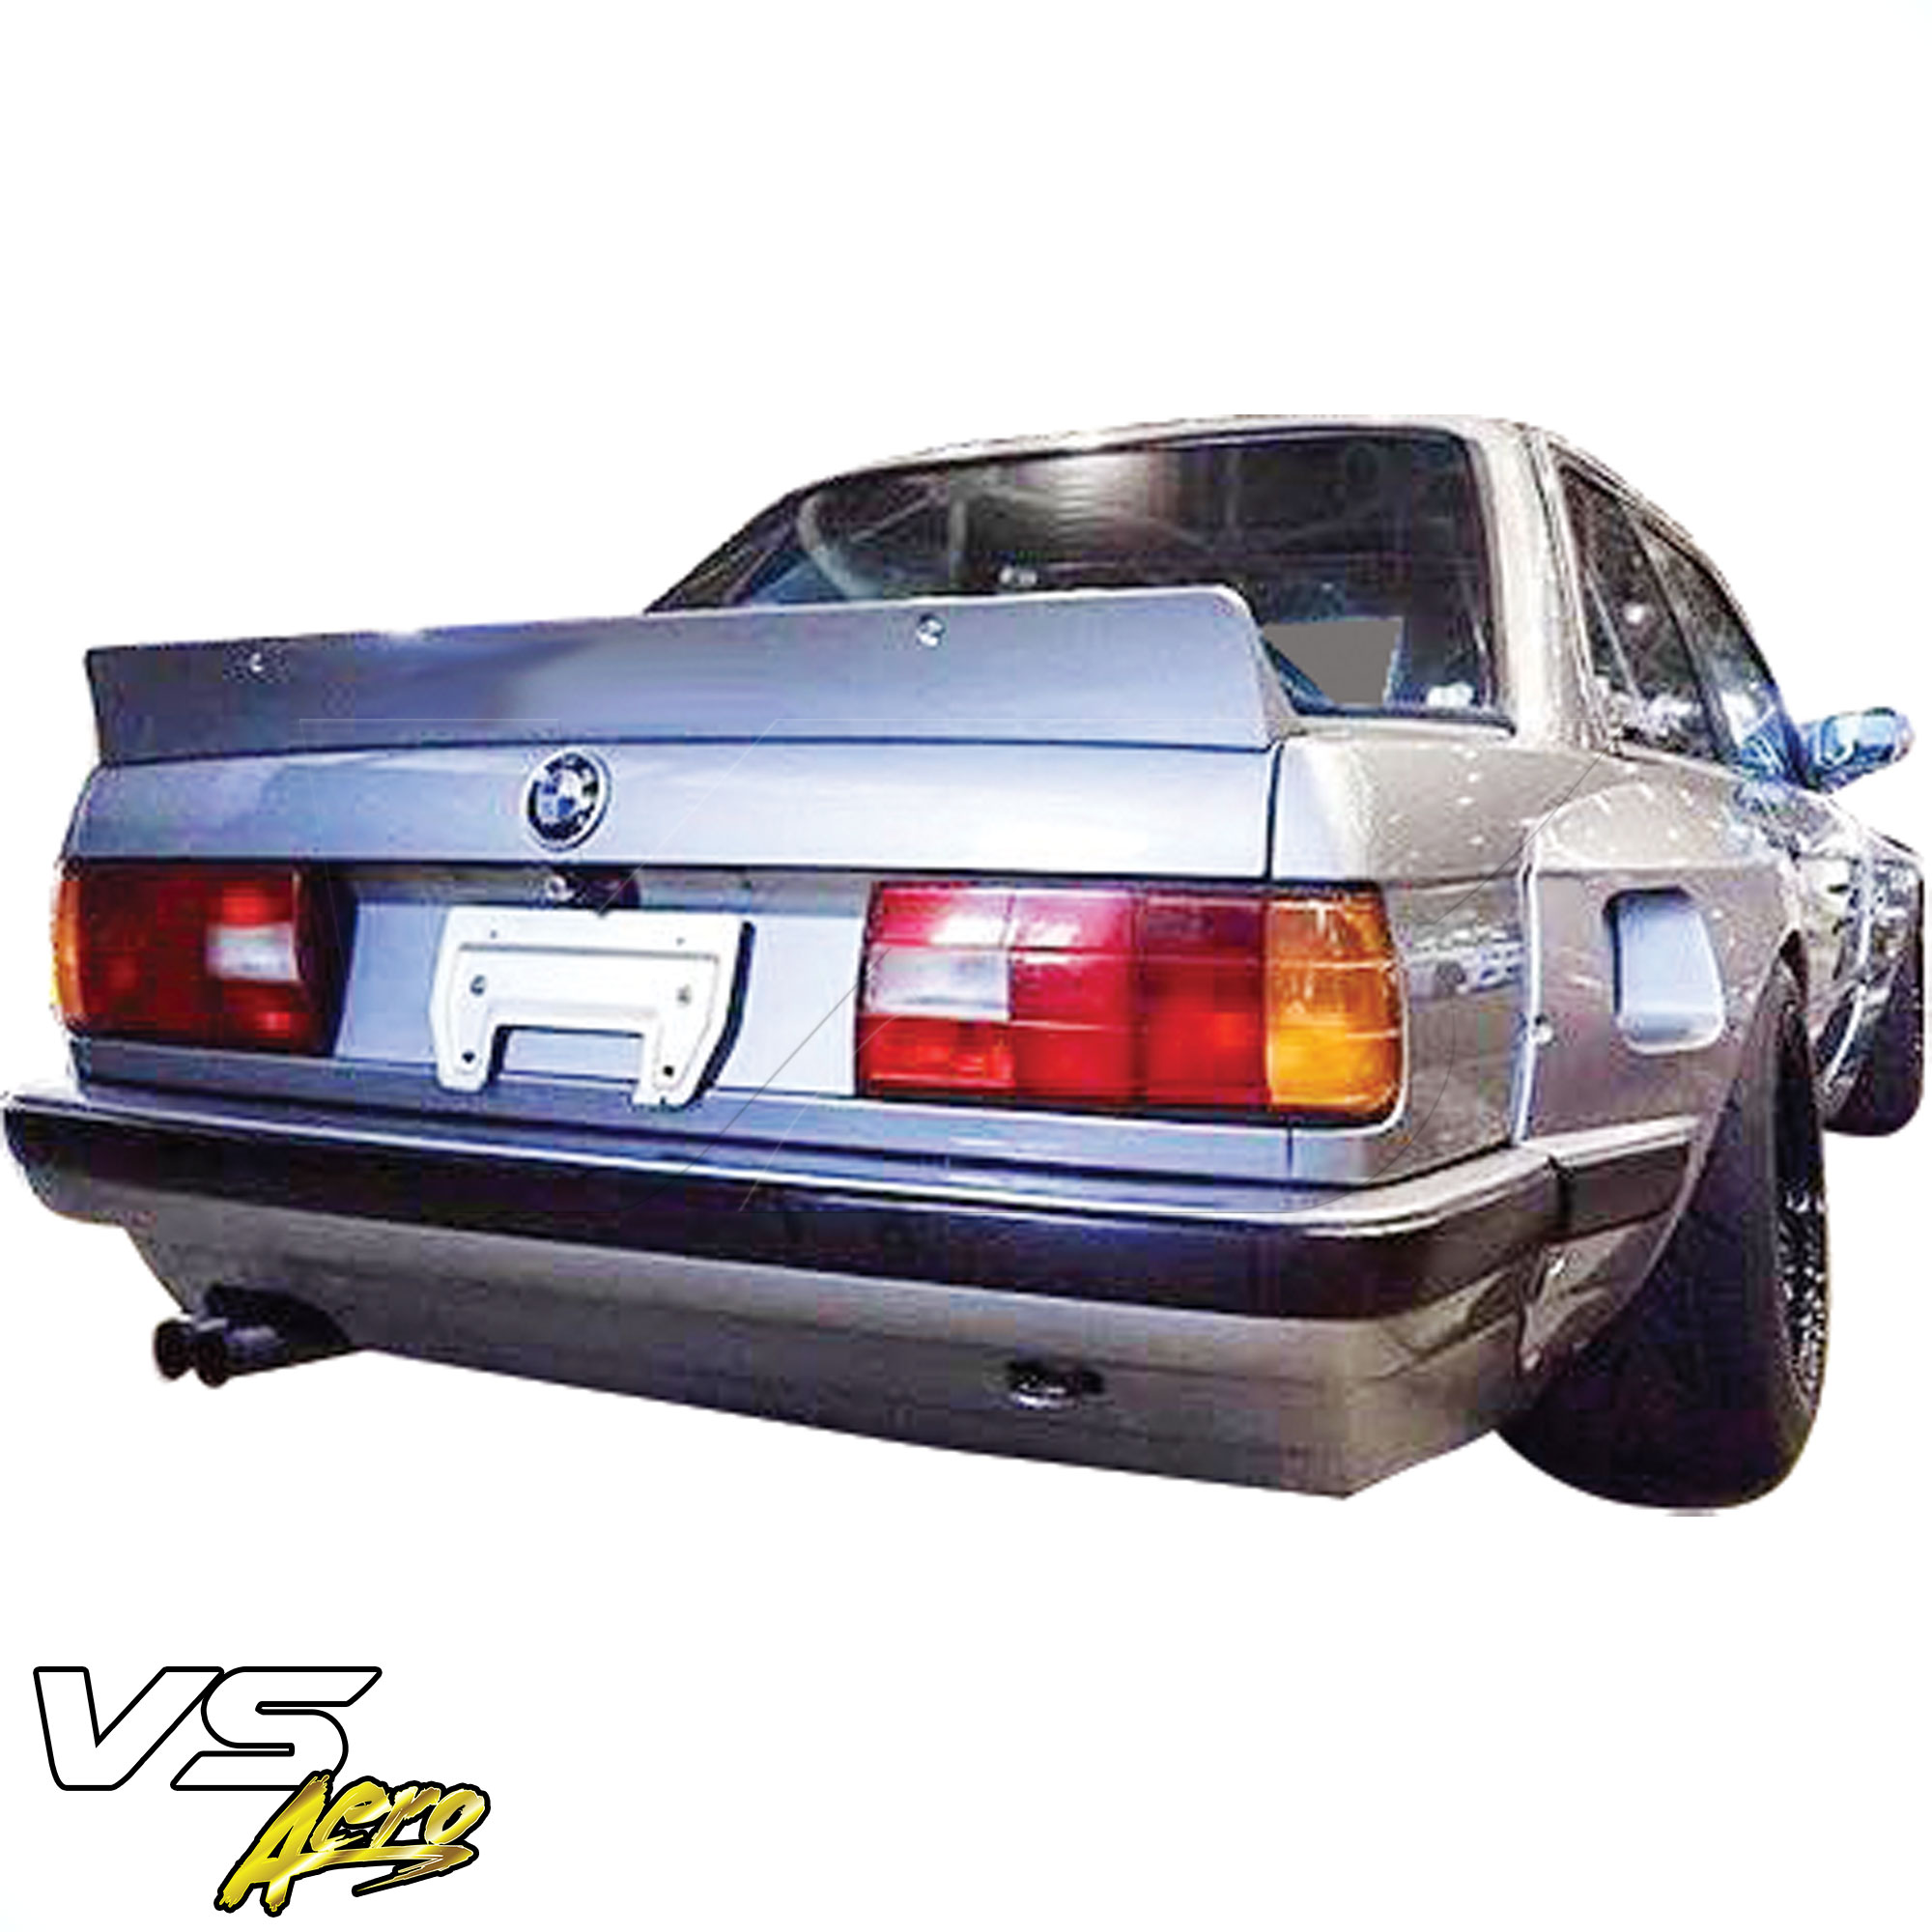 VSaero FRP TKYO Spoiler Wing > BMW 3-Series 318i 325i E30 1984-1991> 2dr Coupe - Image 2